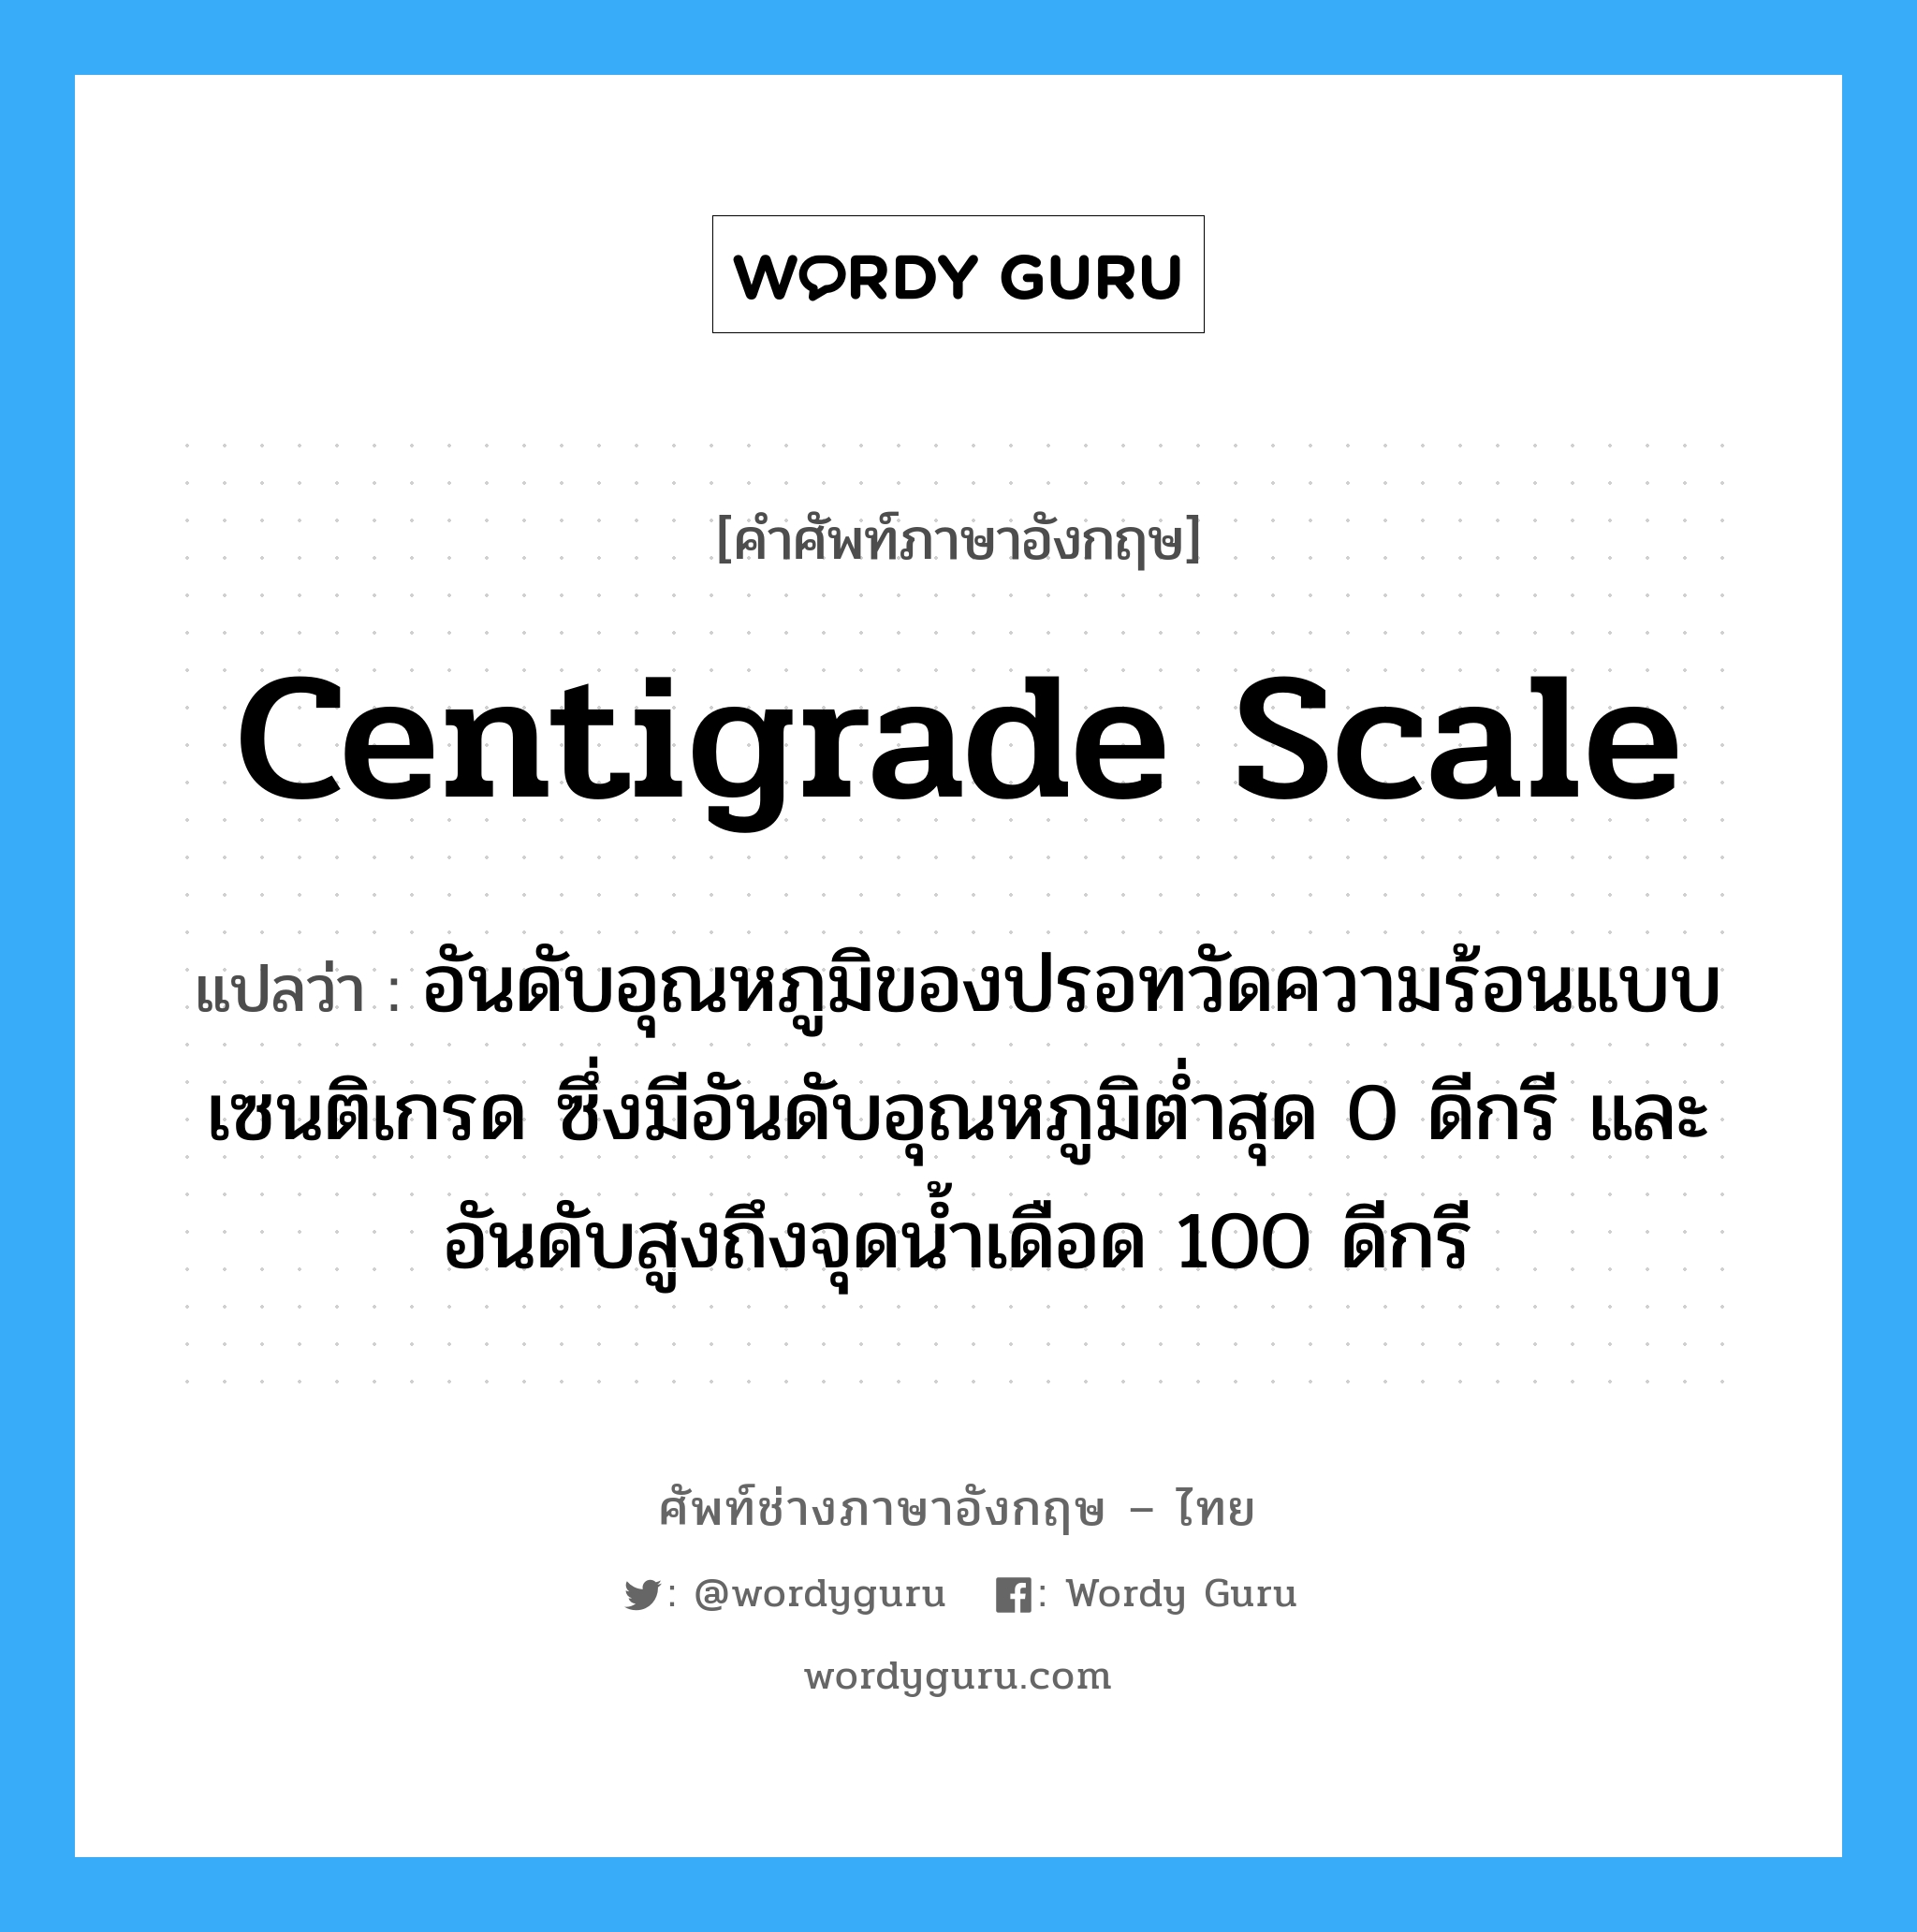 centigrade scale แปลว่า?, คำศัพท์ช่างภาษาอังกฤษ - ไทย centigrade scale คำศัพท์ภาษาอังกฤษ centigrade scale แปลว่า อันดับอุณหภูมิของปรอทวัดความร้อนแบบ เซนติเกรด ซึ่งมีอันดับอุณหภูมิต่ำสุด 0 ดีกรี และอันดับสูงถึงจุดน้ำเดือด 100 ดีกรี